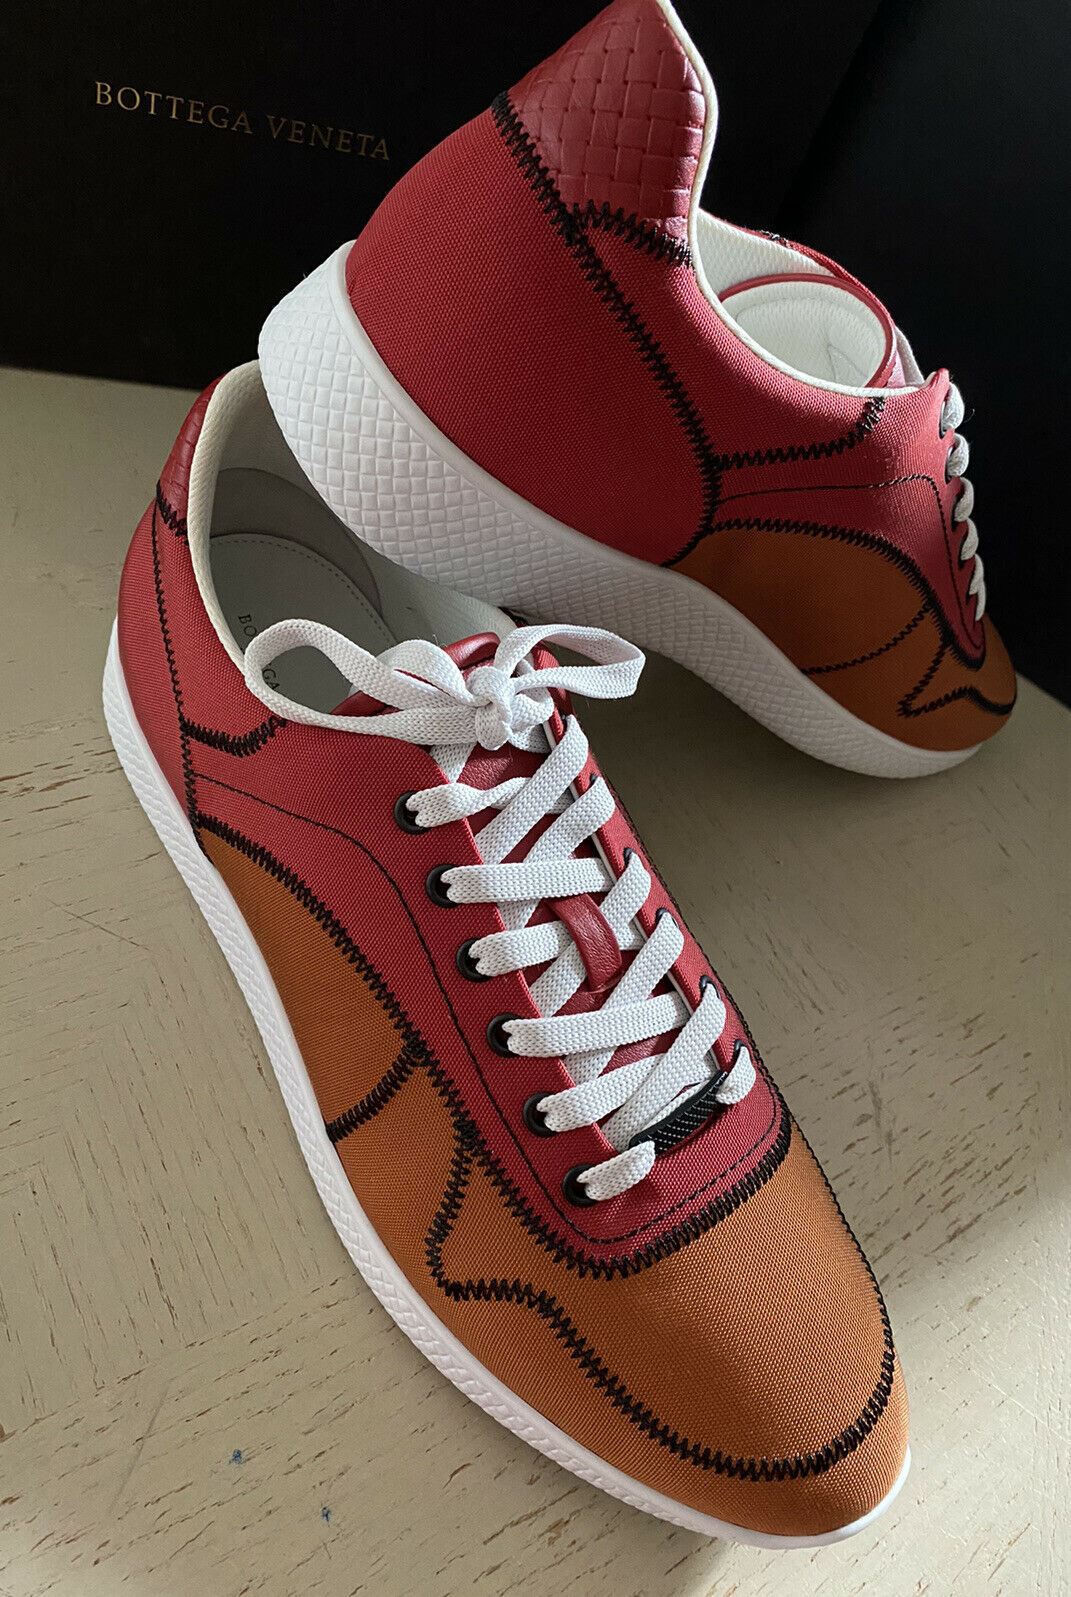 NIB $650 Bottega Veneta Men Canvas/Leather Sneaker Shoes Orange/Red 9.5 US/42.5